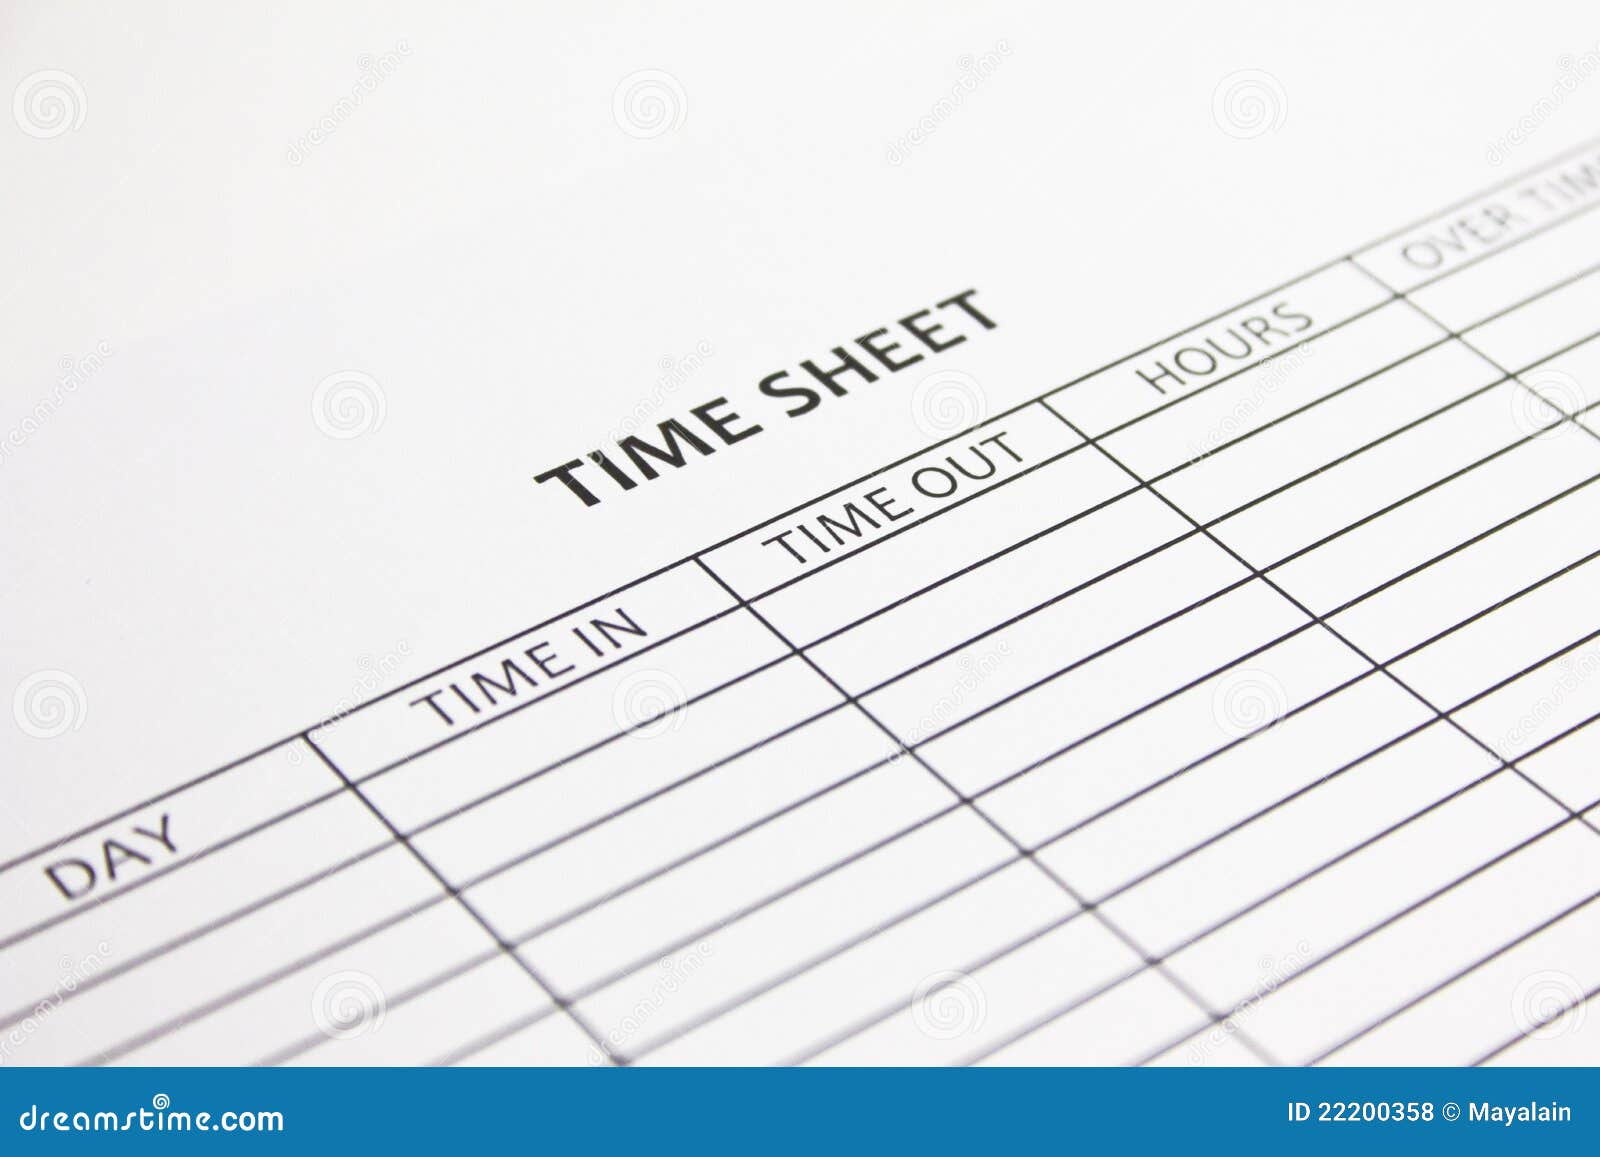 Time Sheet stock photo. Image of overtime, employee, finish - 22200358